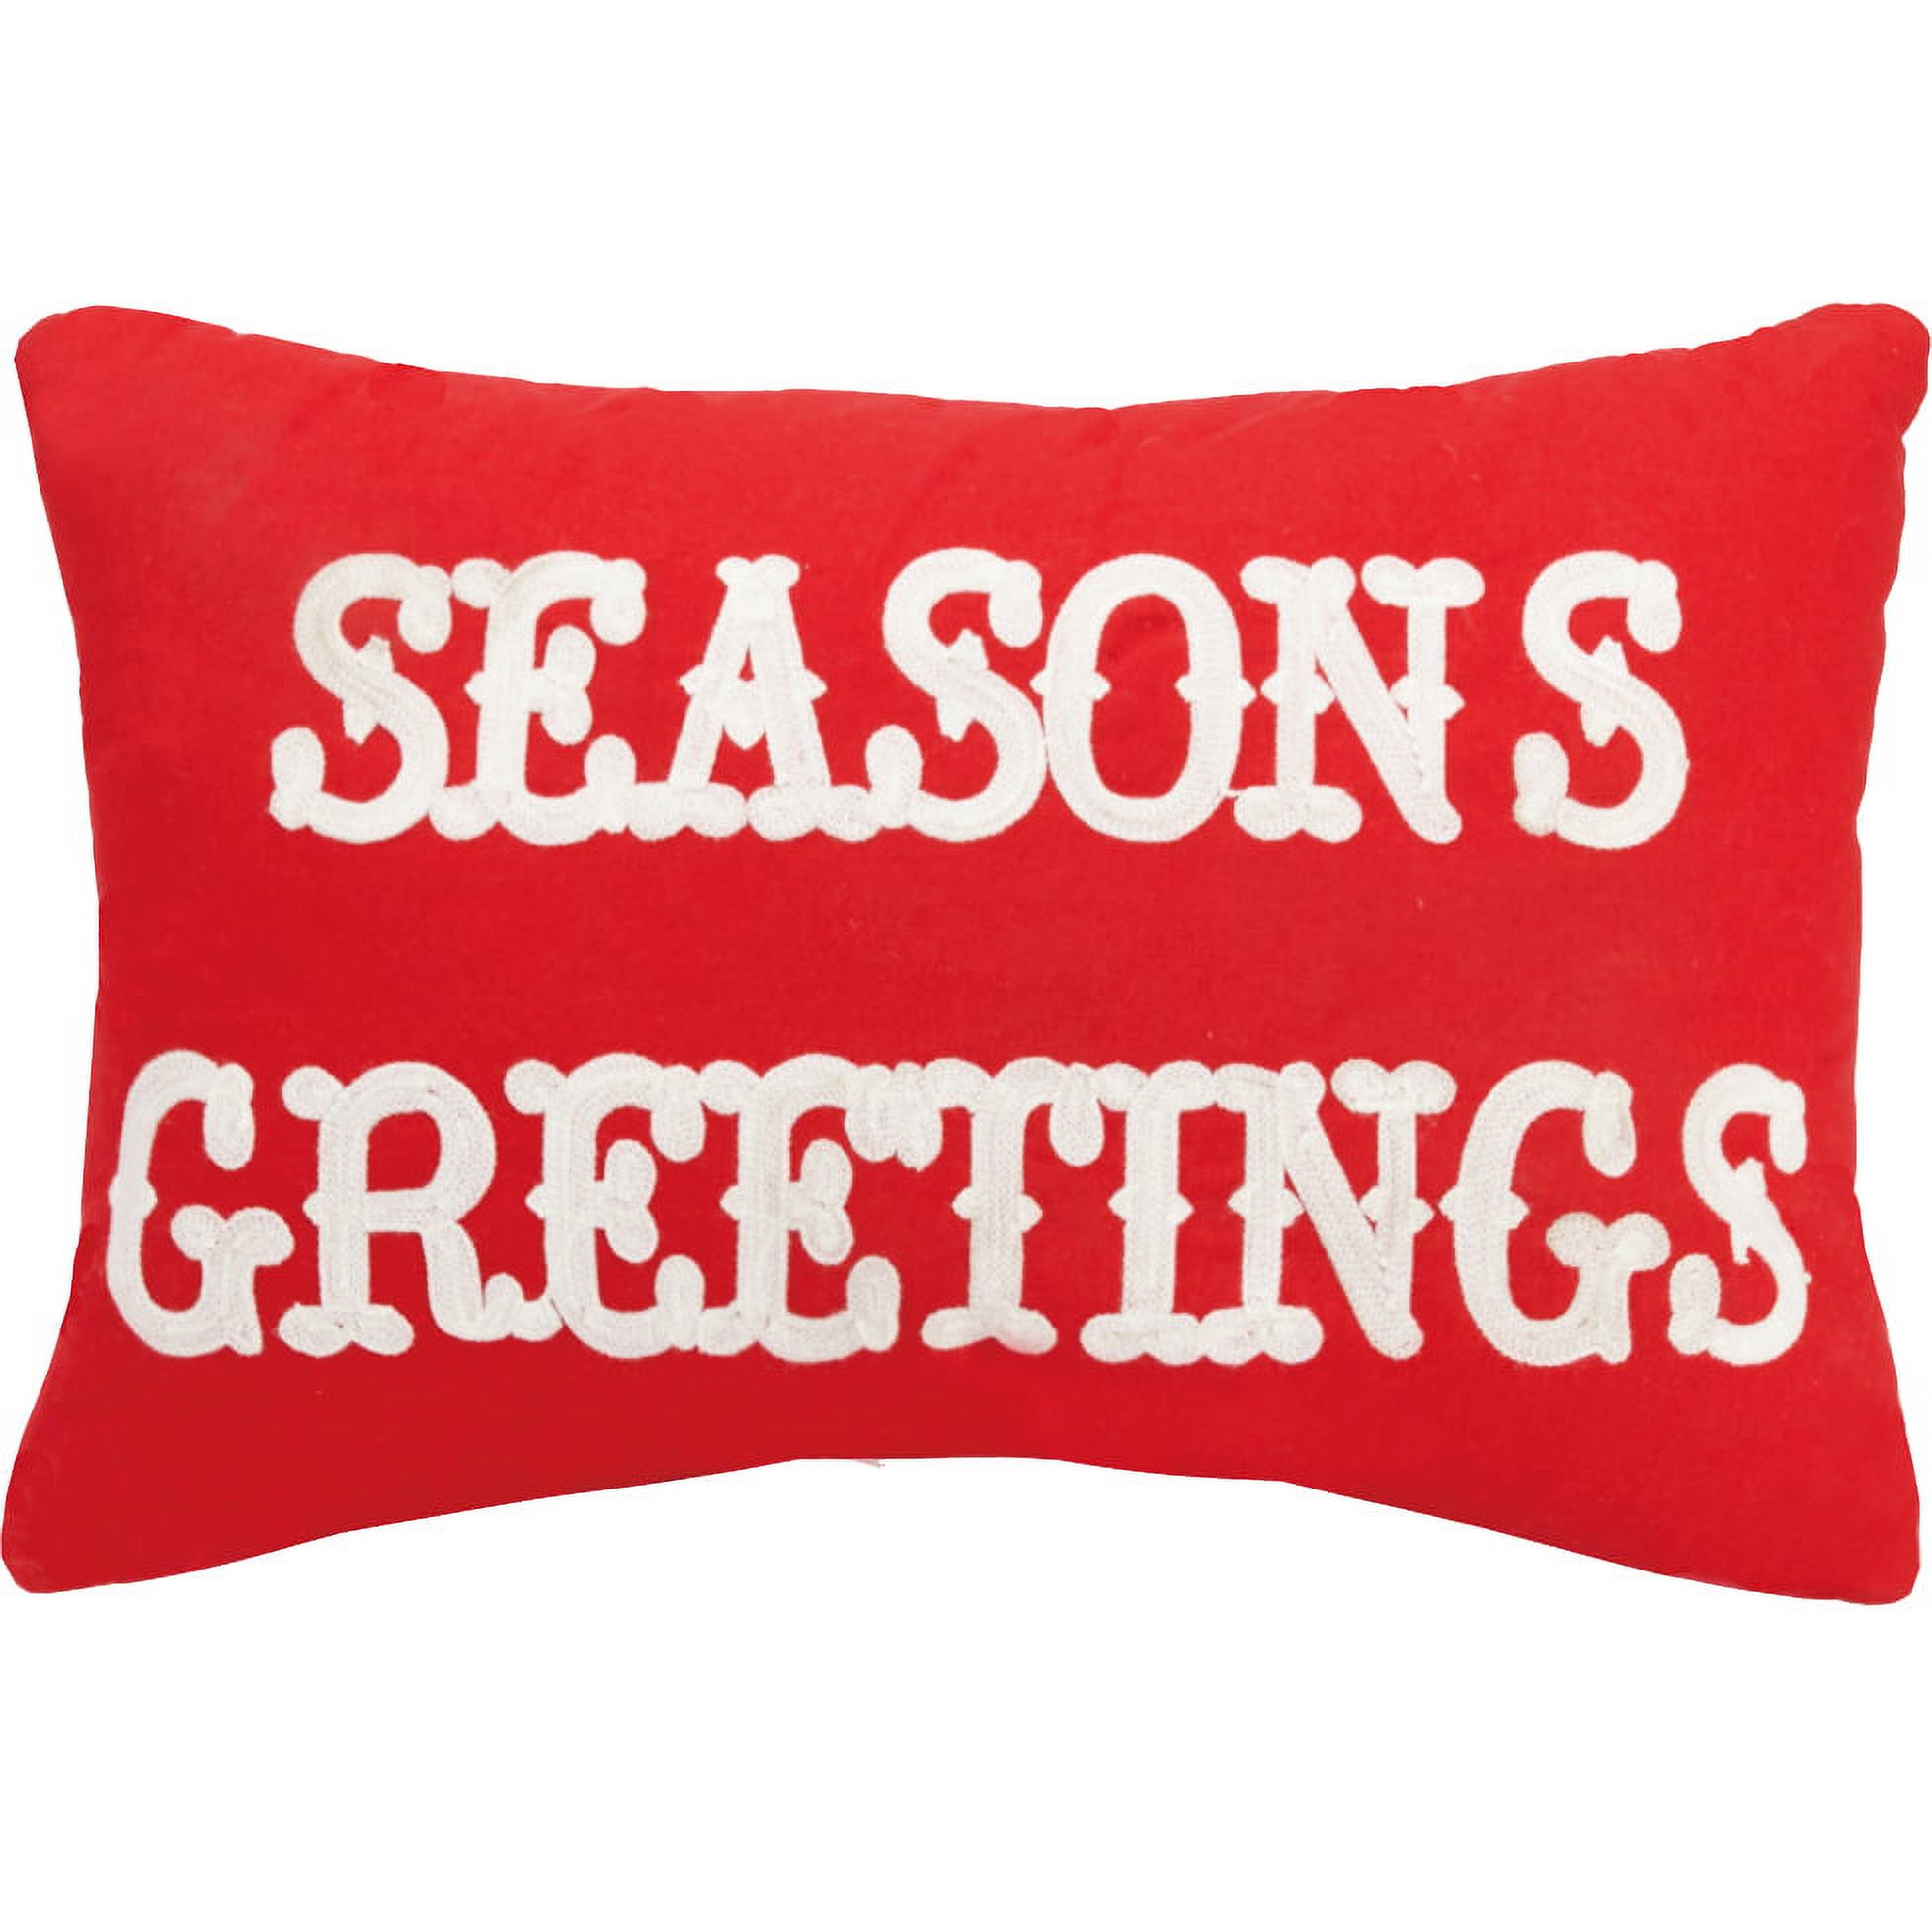 Better Homes & Gardens Seasons Greeting Pillow - image 1 of 1